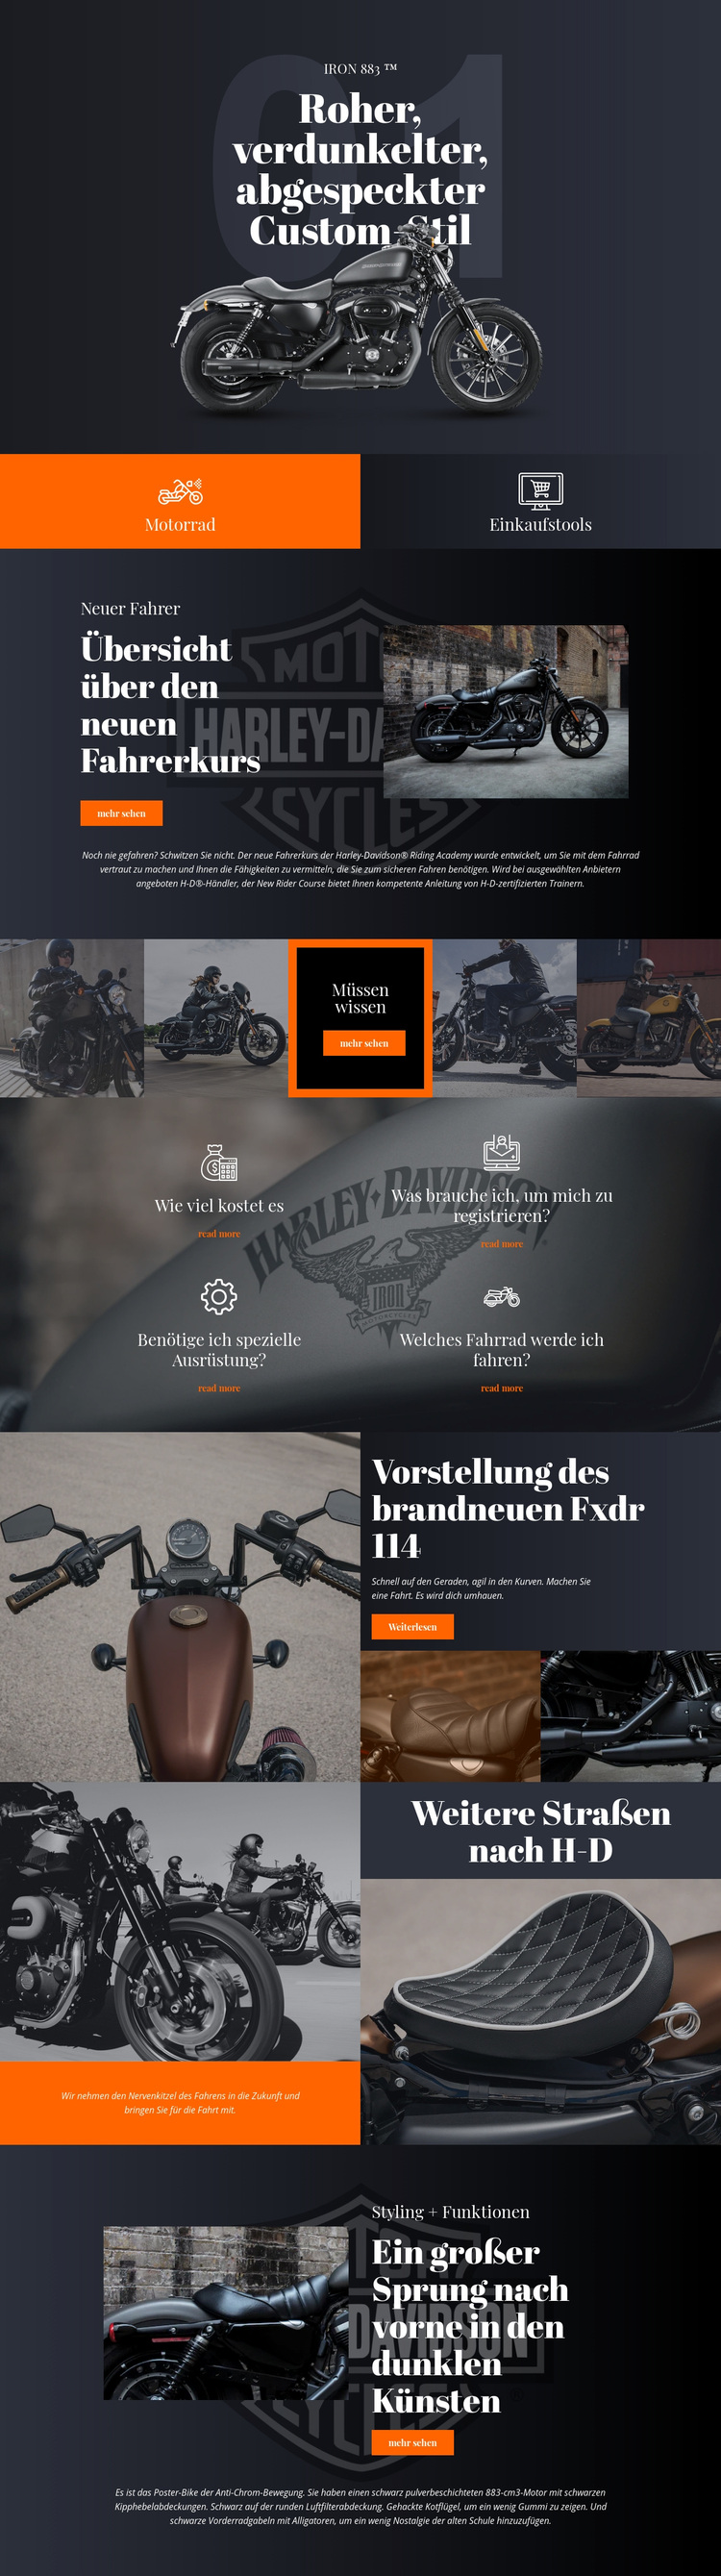 Harley Davidson WordPress-Theme